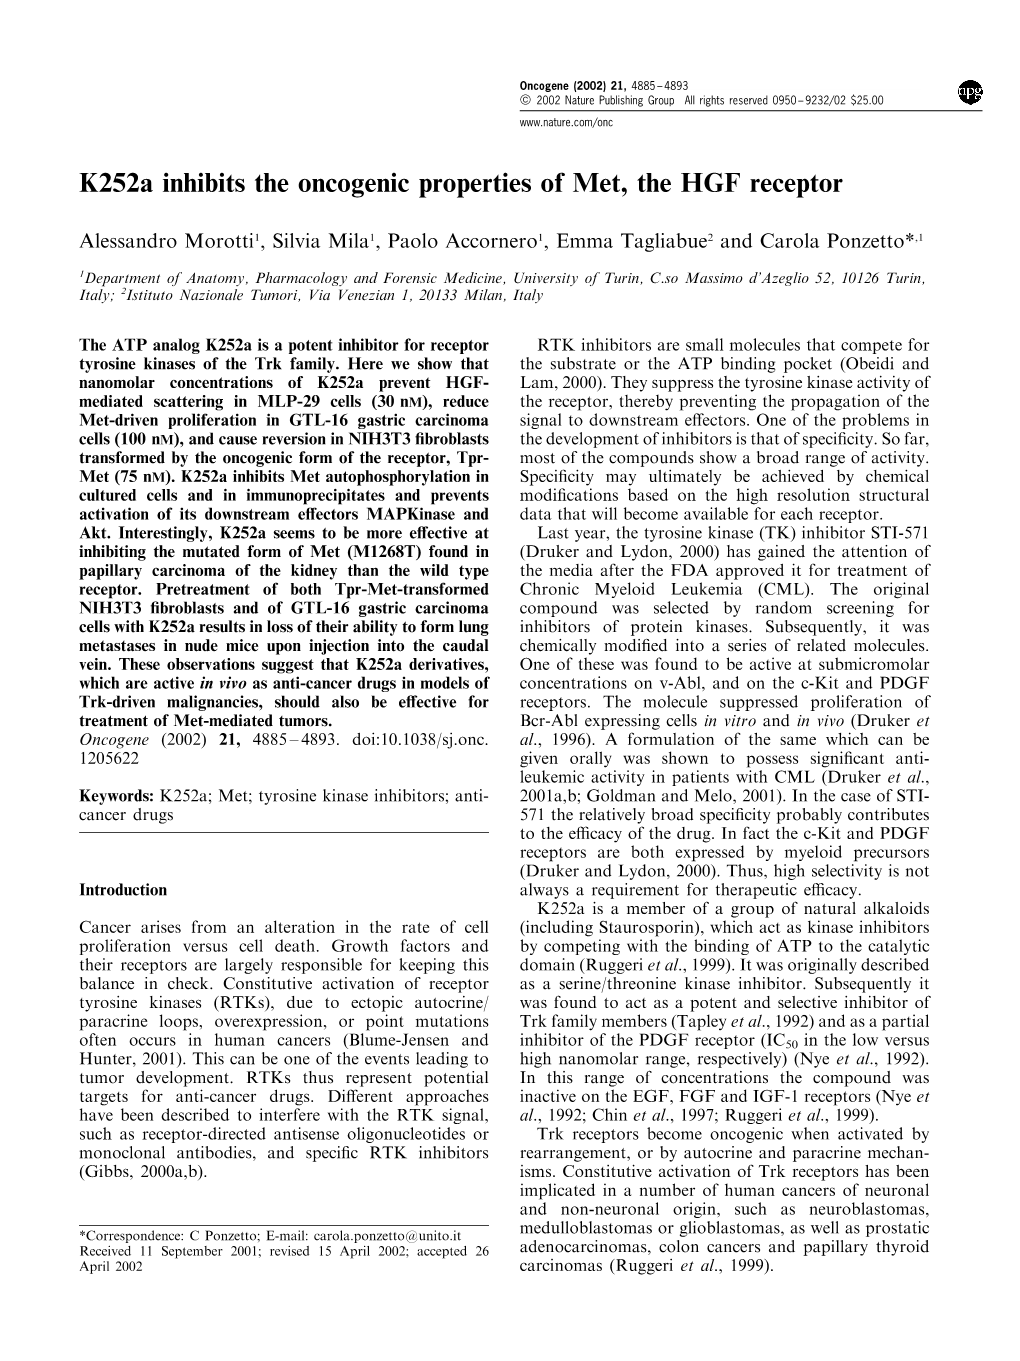 K252a Inhibits the Oncogenic Properties of Met, the HGF Receptor